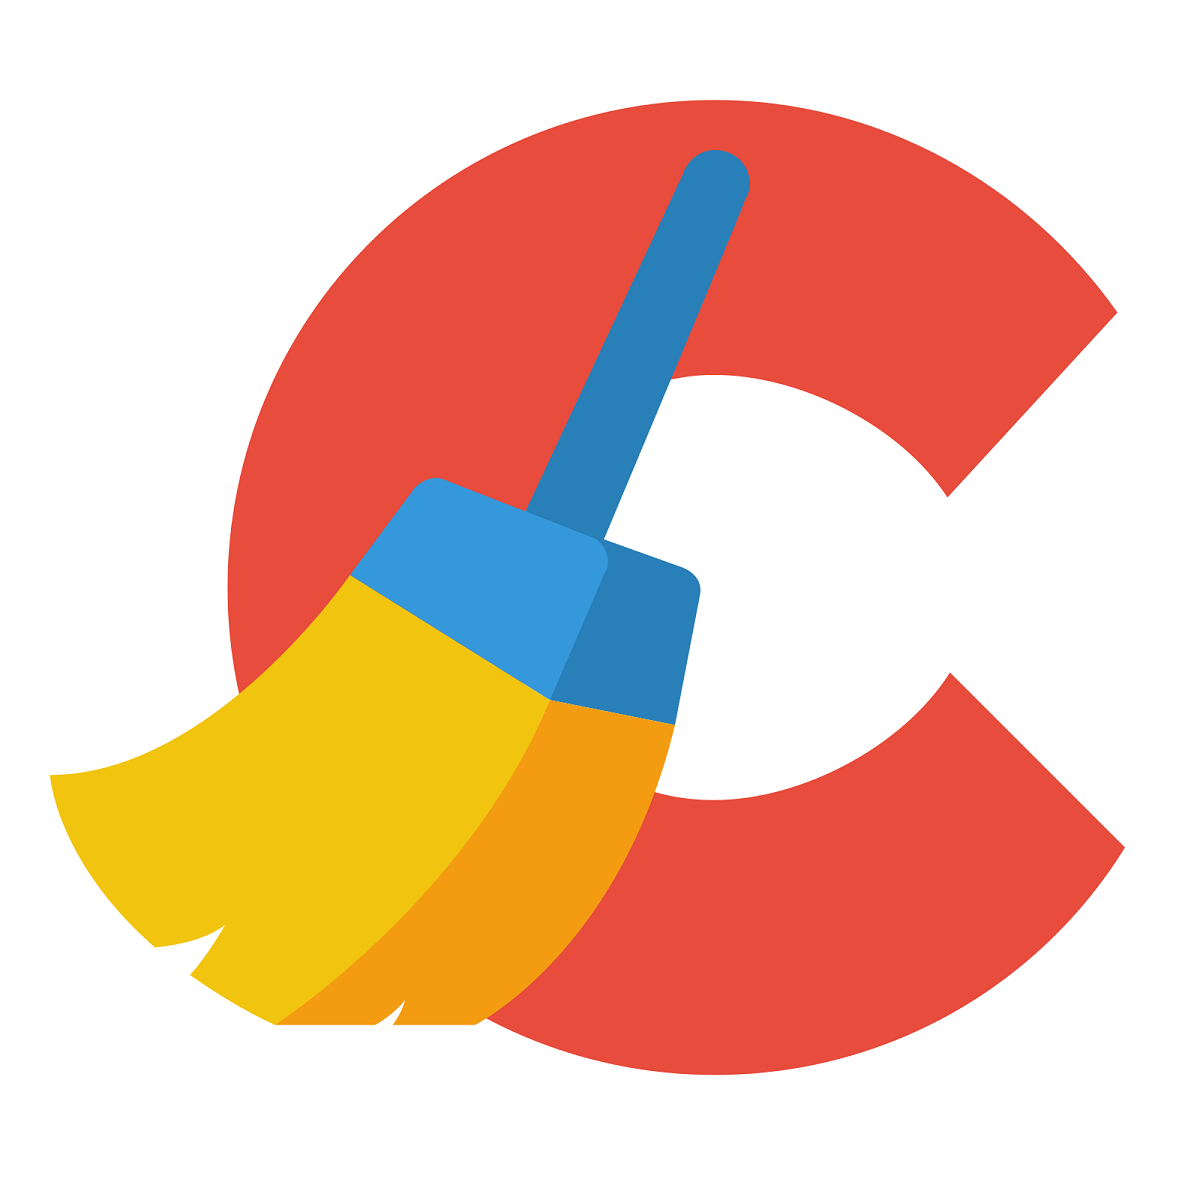 ccleaner logo cover